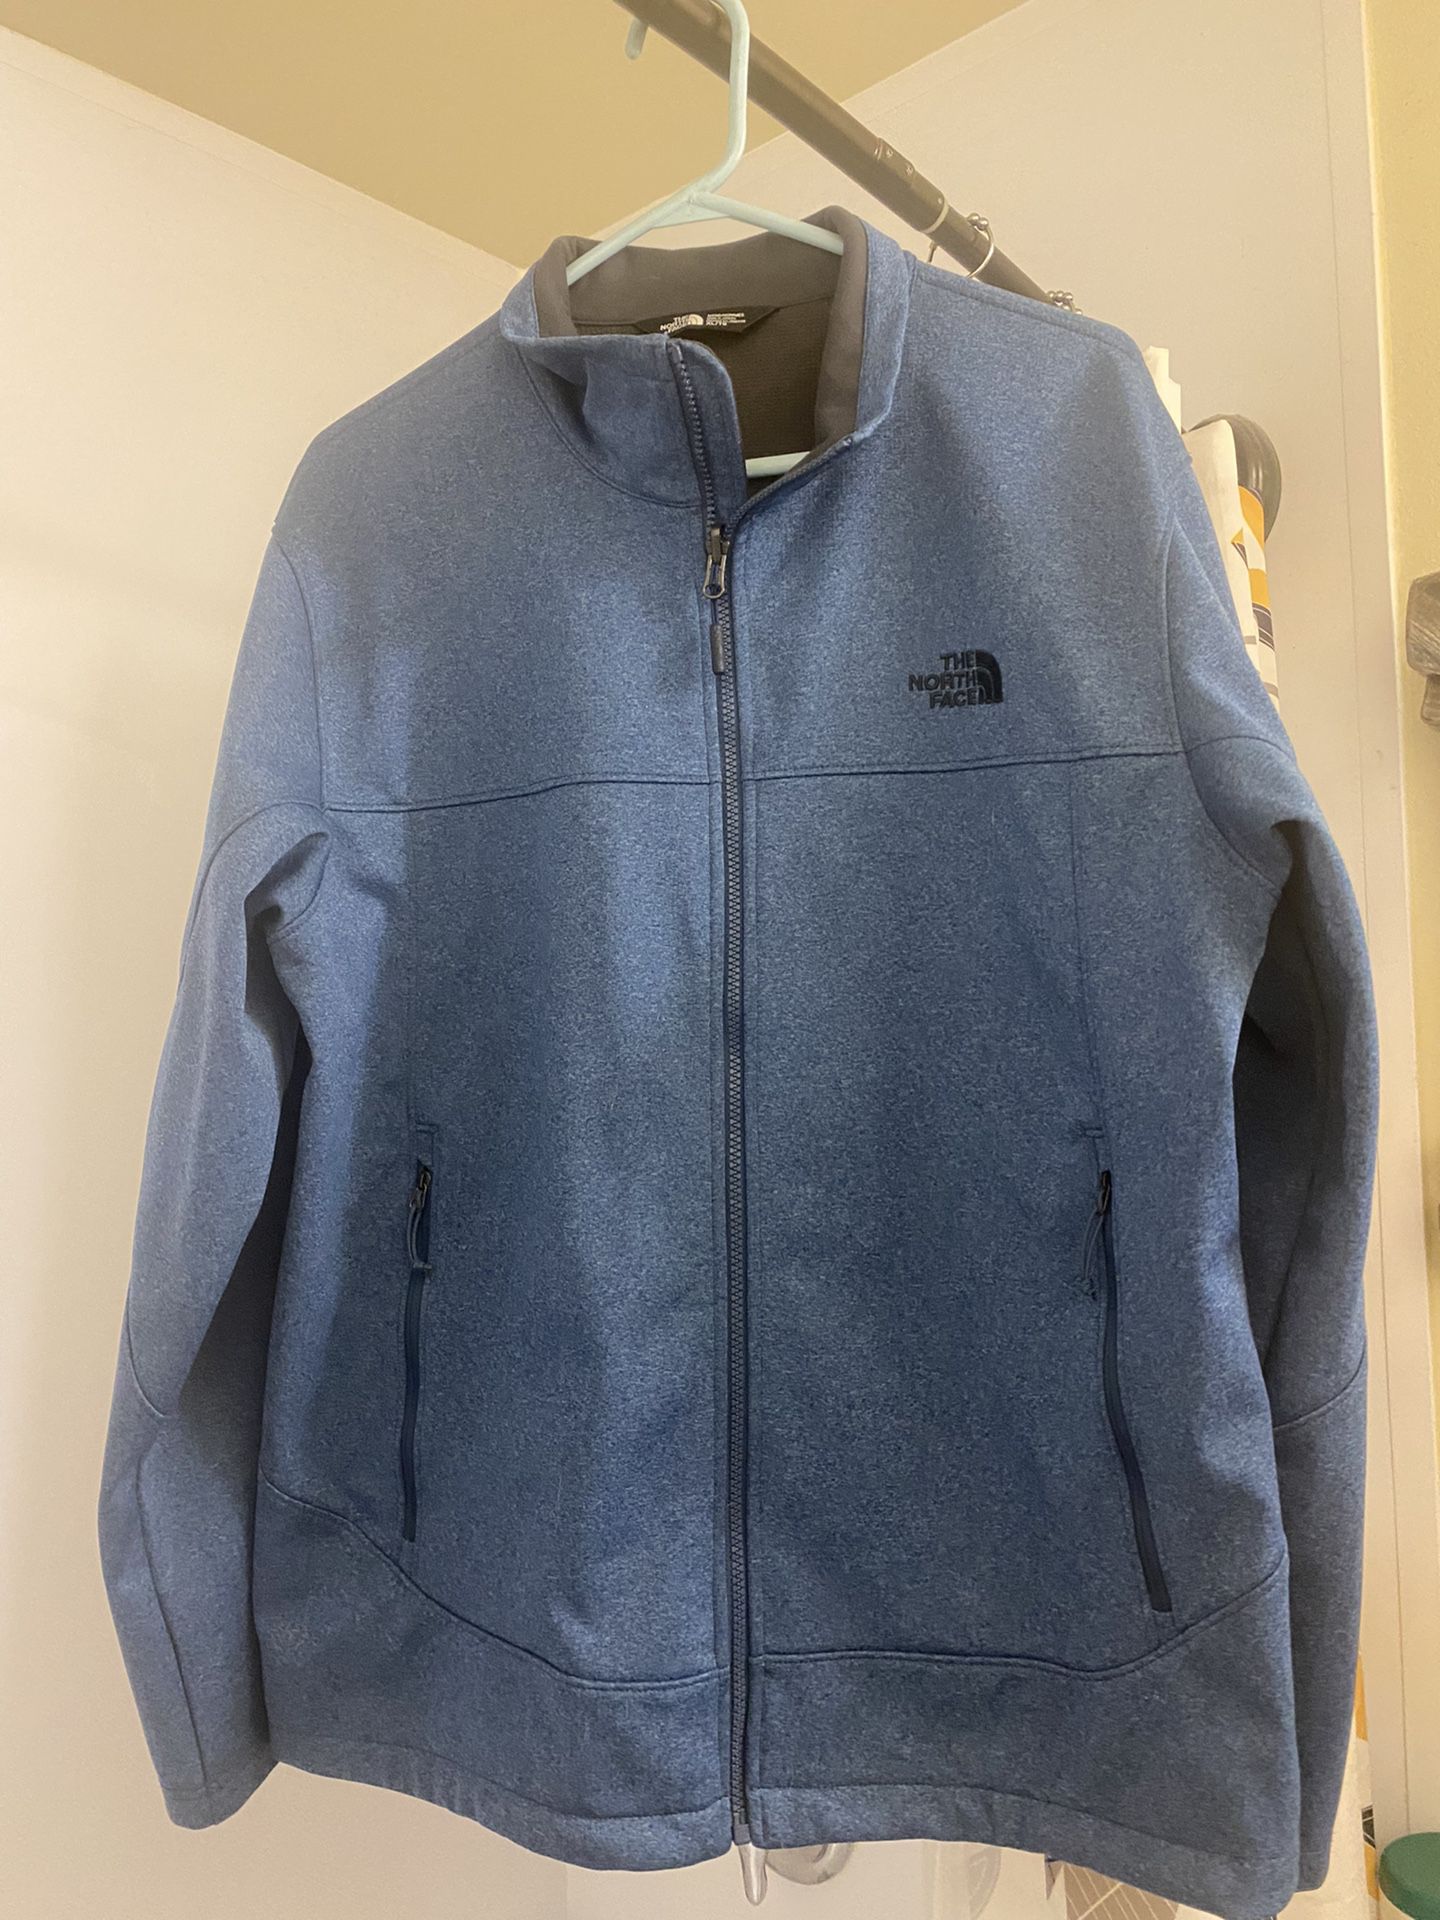 North Face Men’s XL Jacket